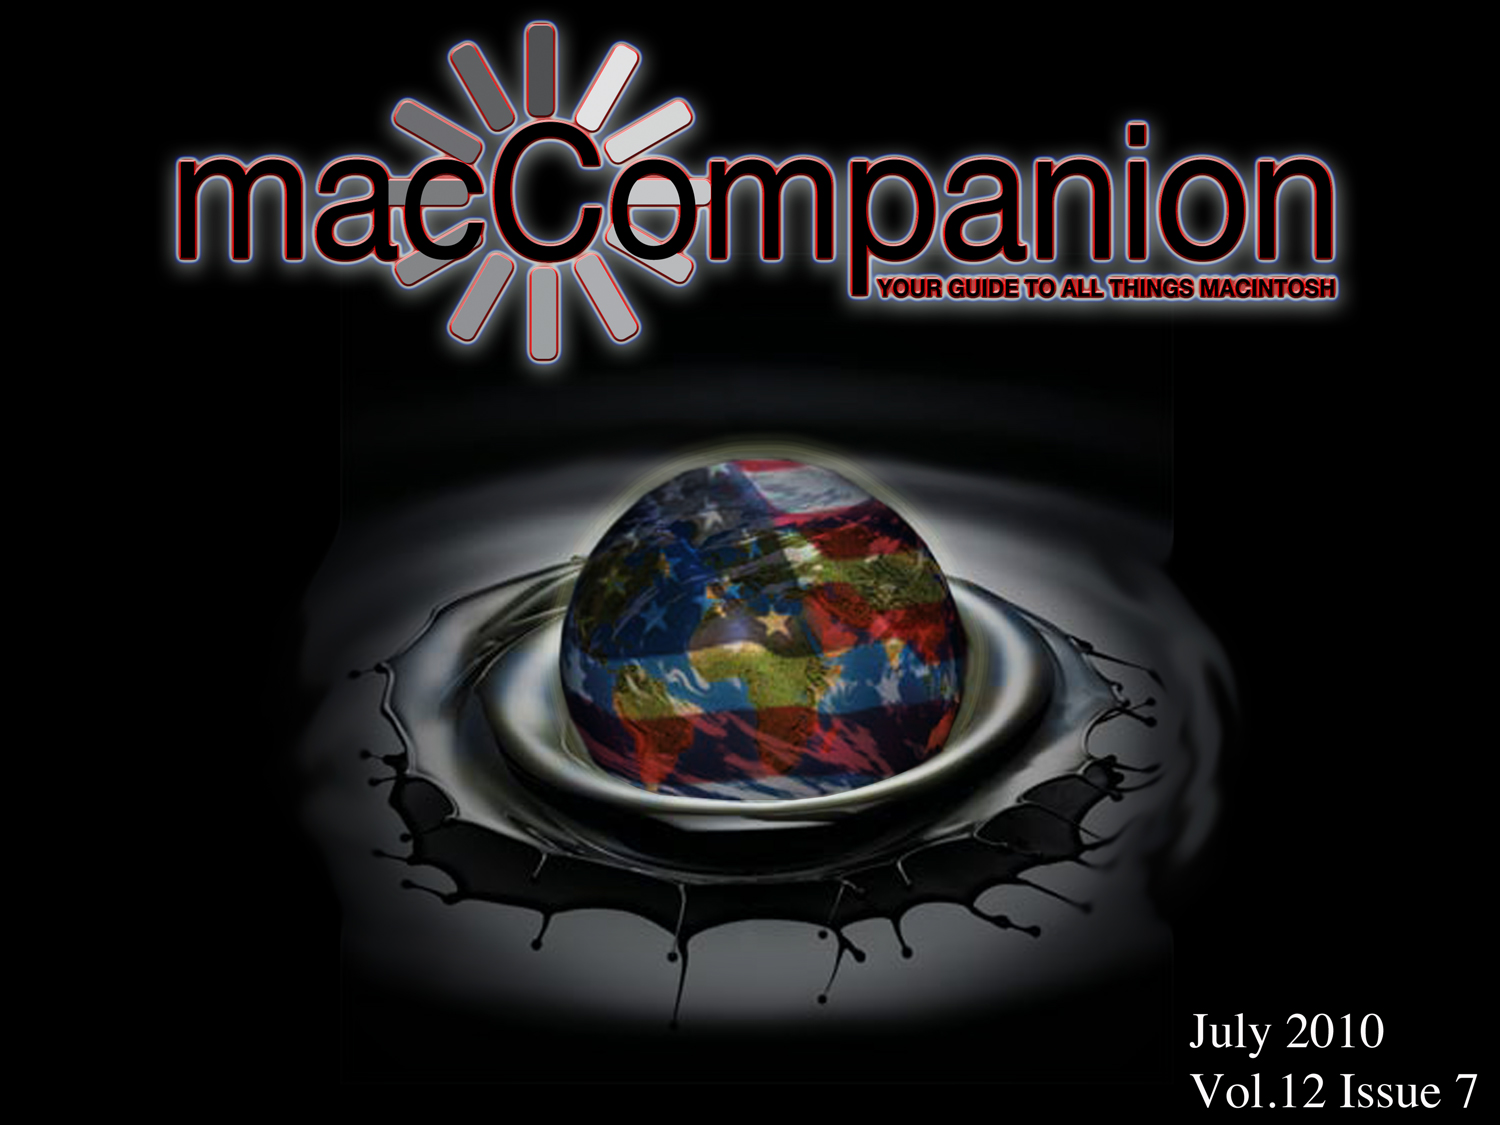 macCompanion July 2010 issue